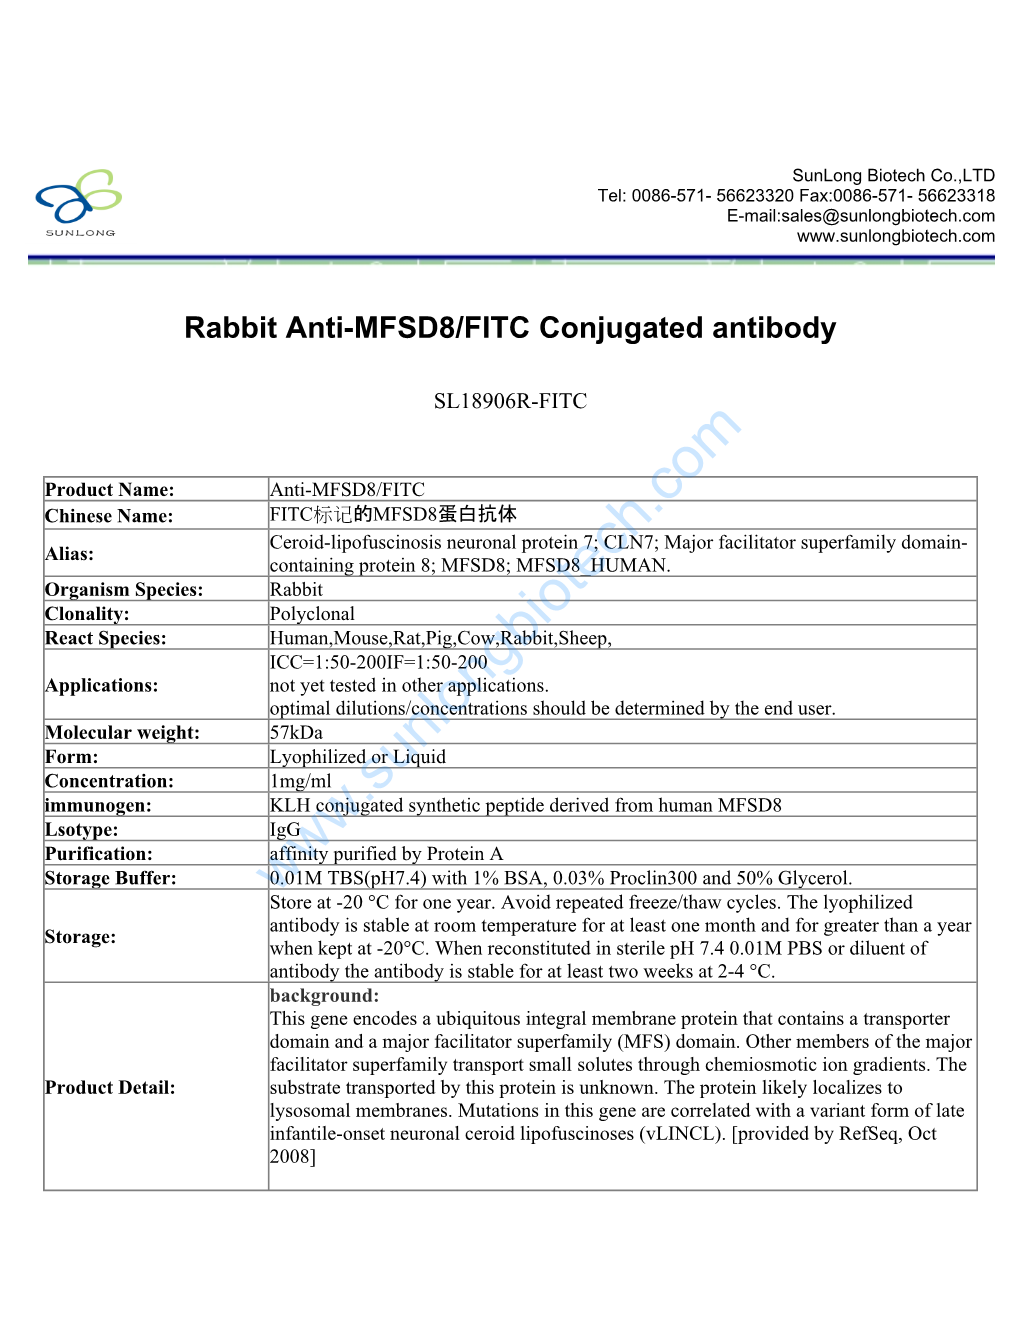 Rabbit Anti-MFSD8/FITC Conjugated Antibody-SL18906R-FITC